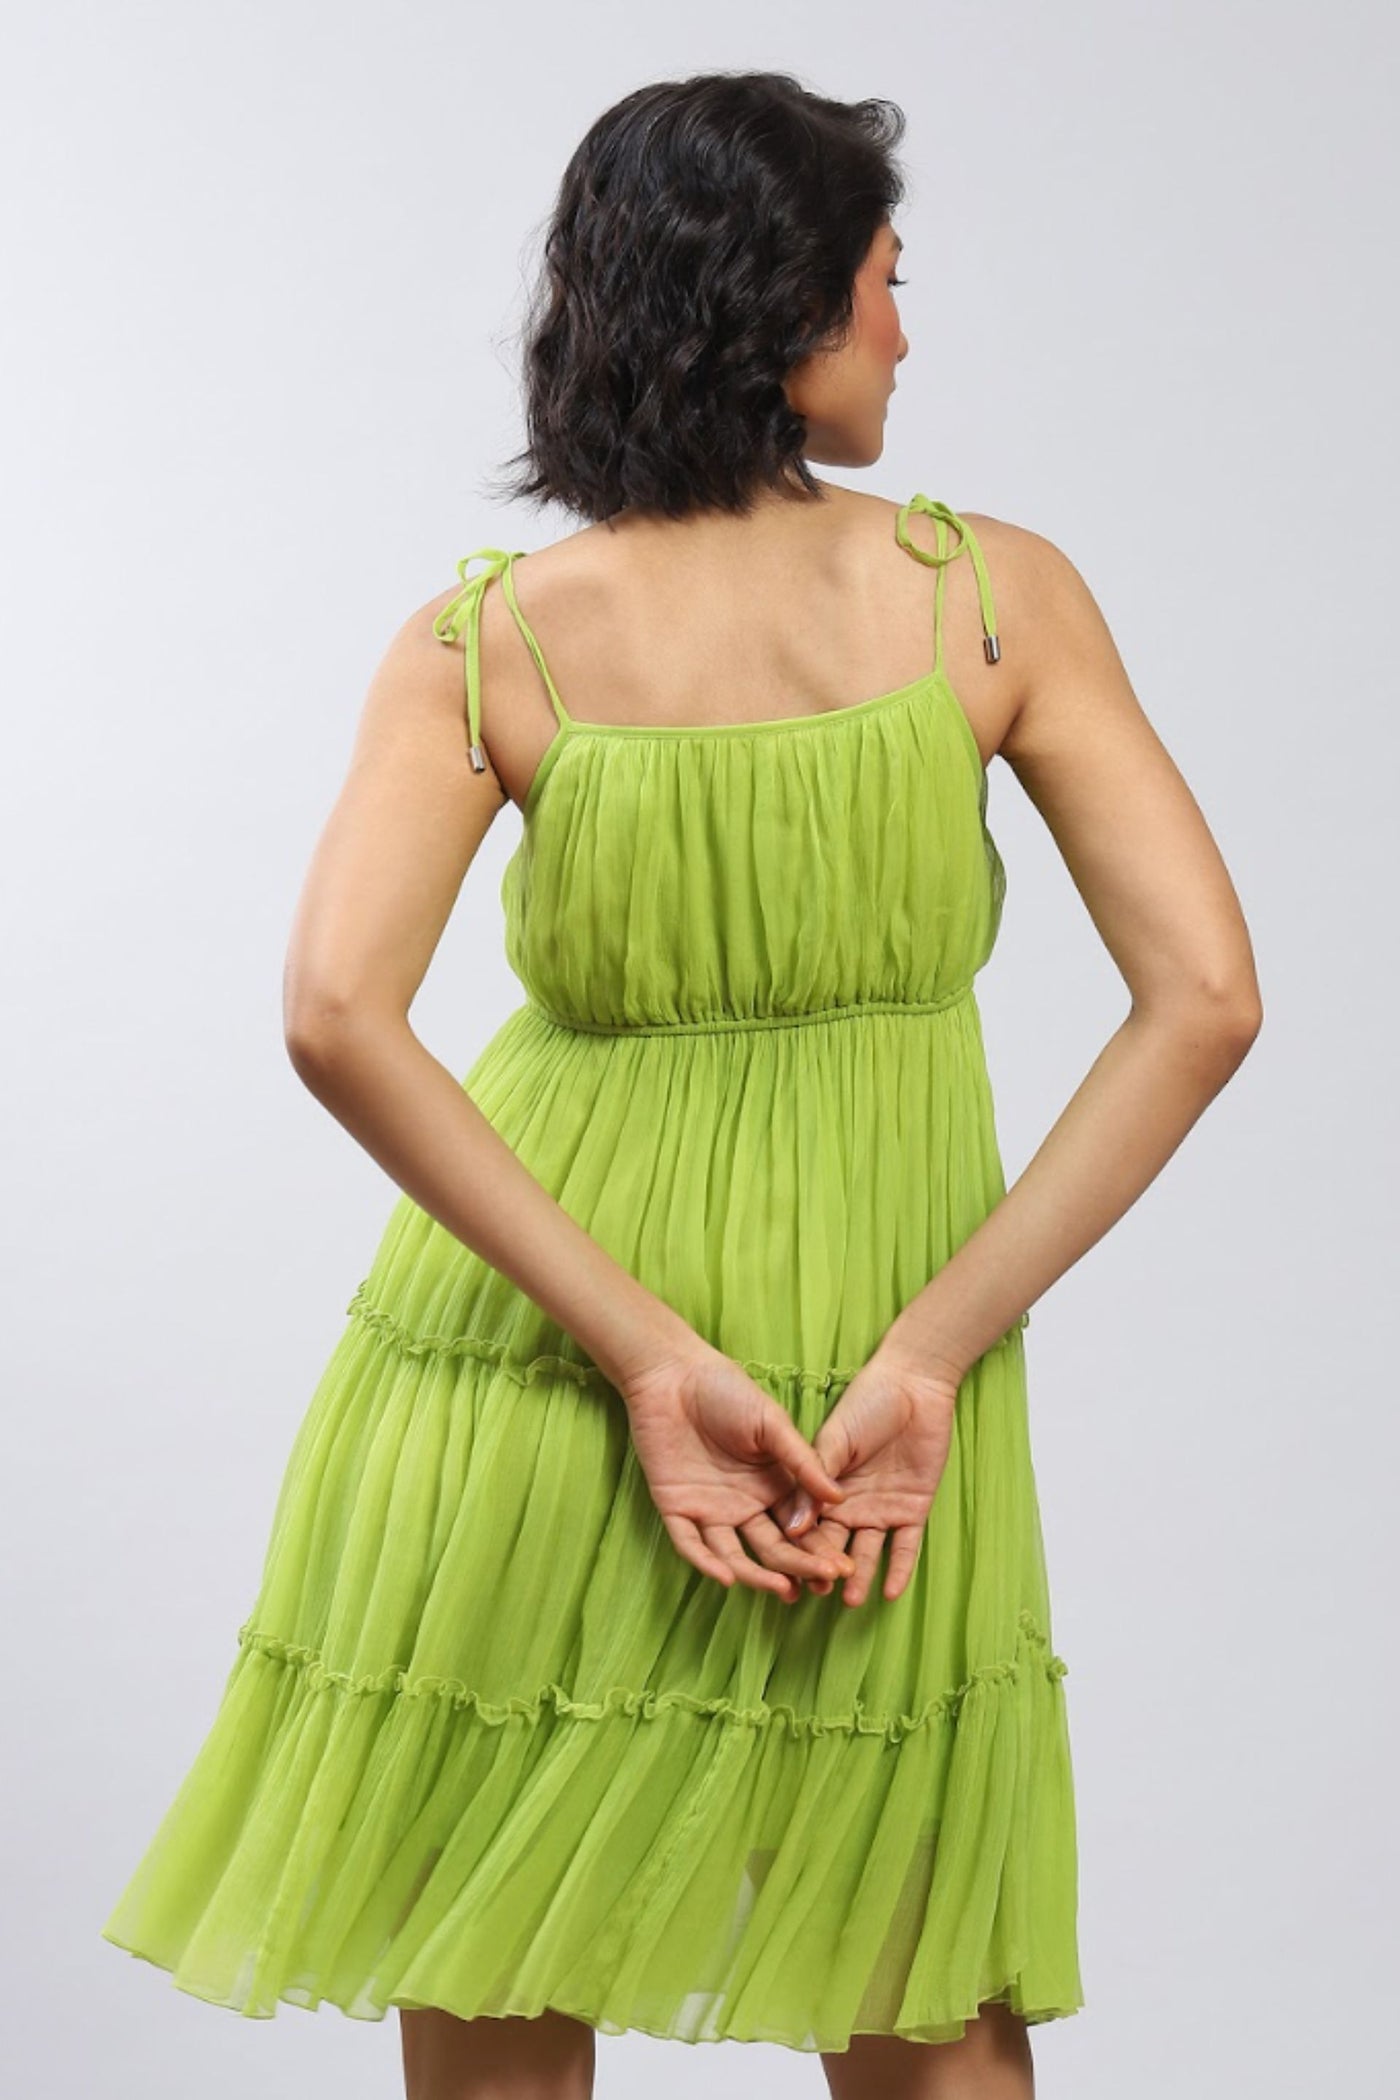 Label Ritu Kumar Strappy solid short dress Indian designer wear online shopping melange singapore